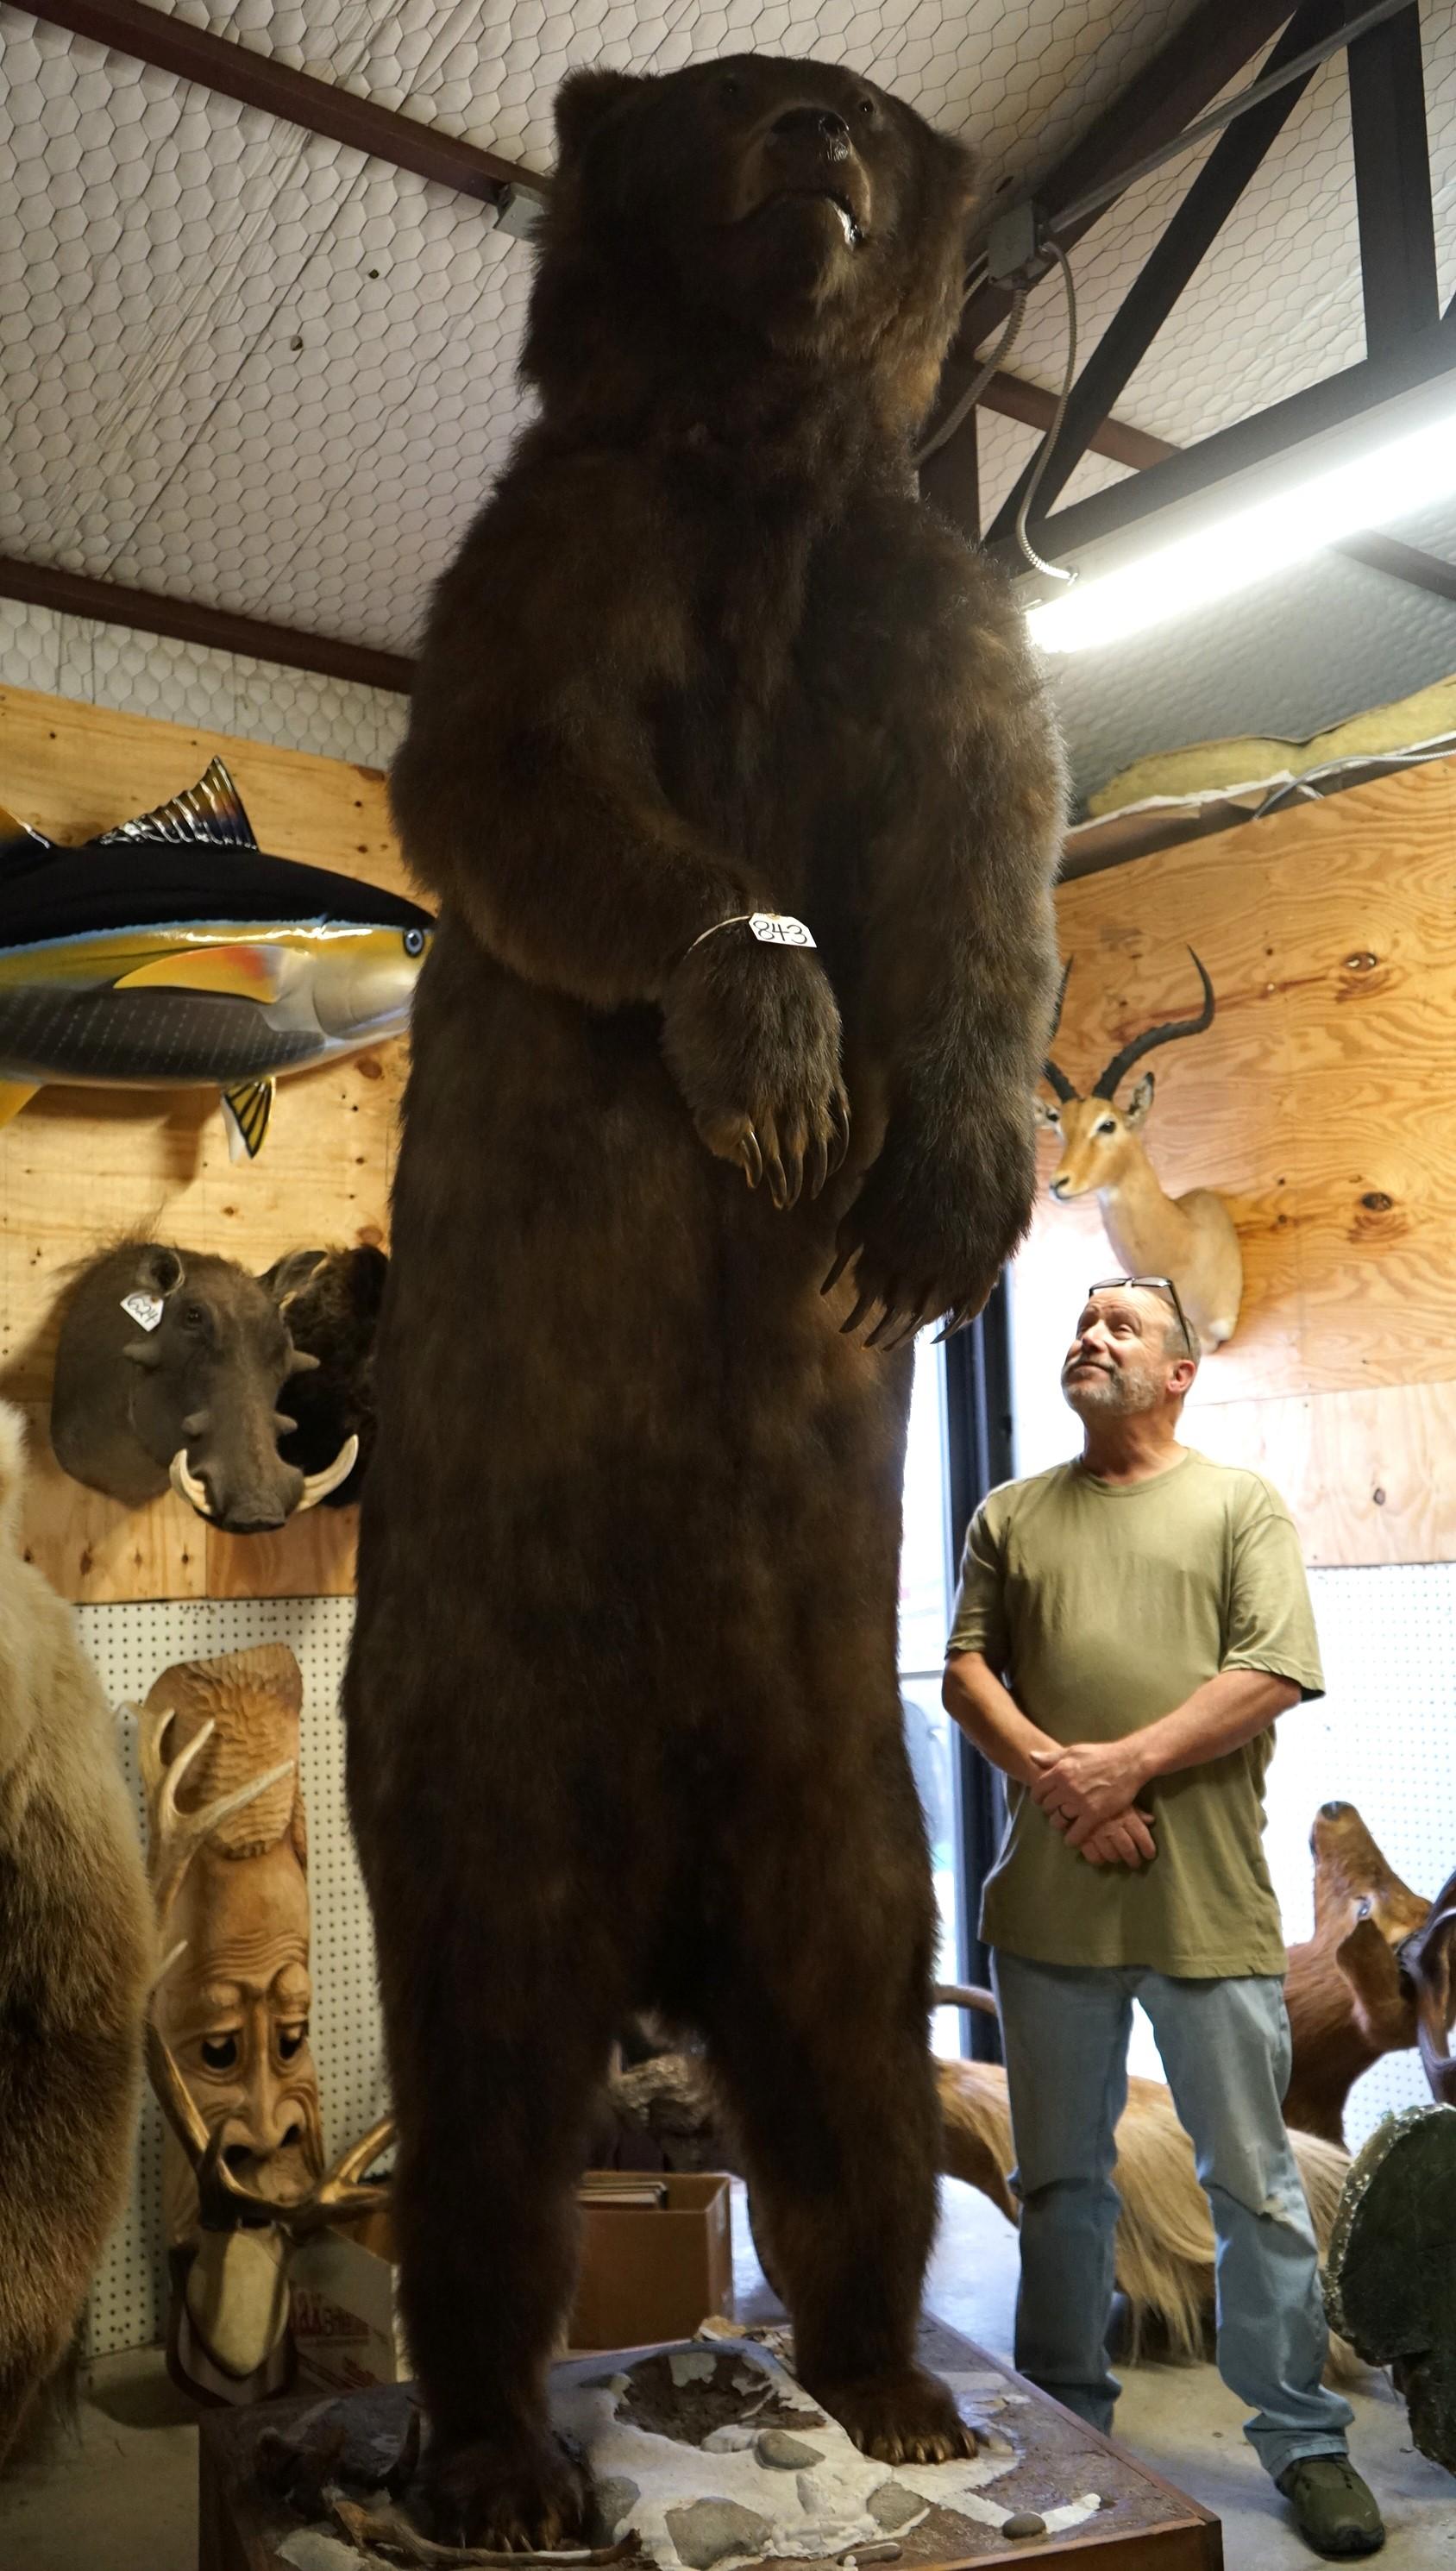 "Gigantic Cave Bear Reject" Alaskan Brown 11Ft. 5" Full Body Taxidermy Mount